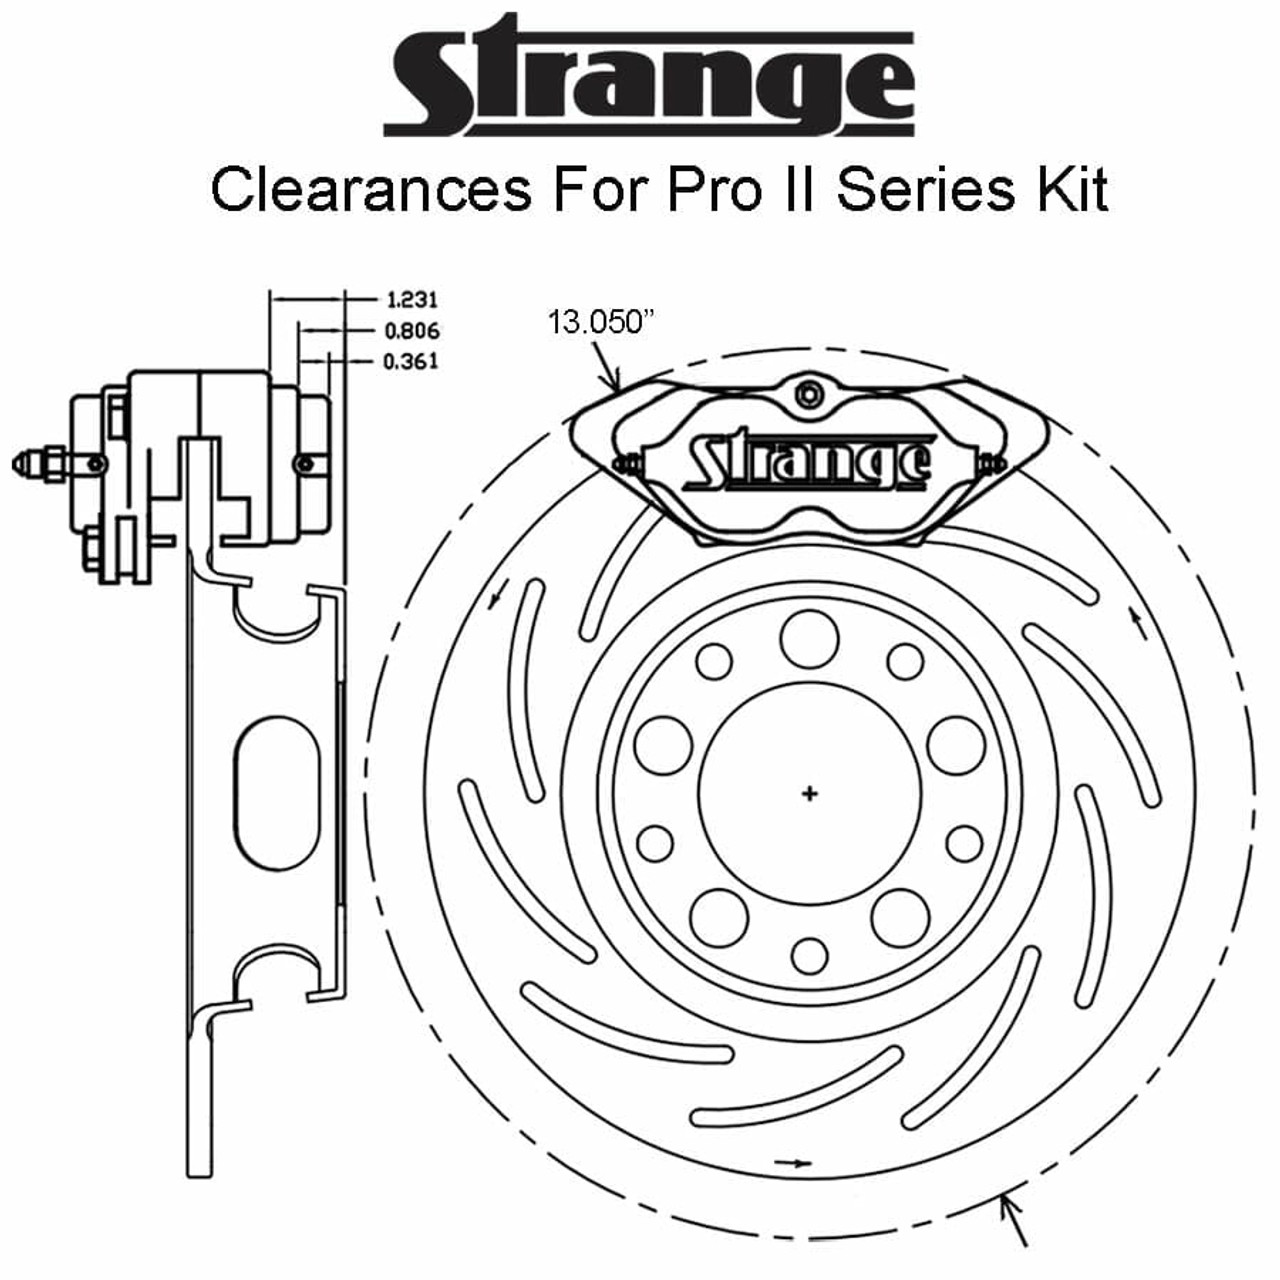 Strange Pro II Rear Brake Kit For OEM 86-93 Mustang Ends & Strange Parts 2 Pc Rotors, 4 Piston Calipers & DRM-35 Metallic Pads